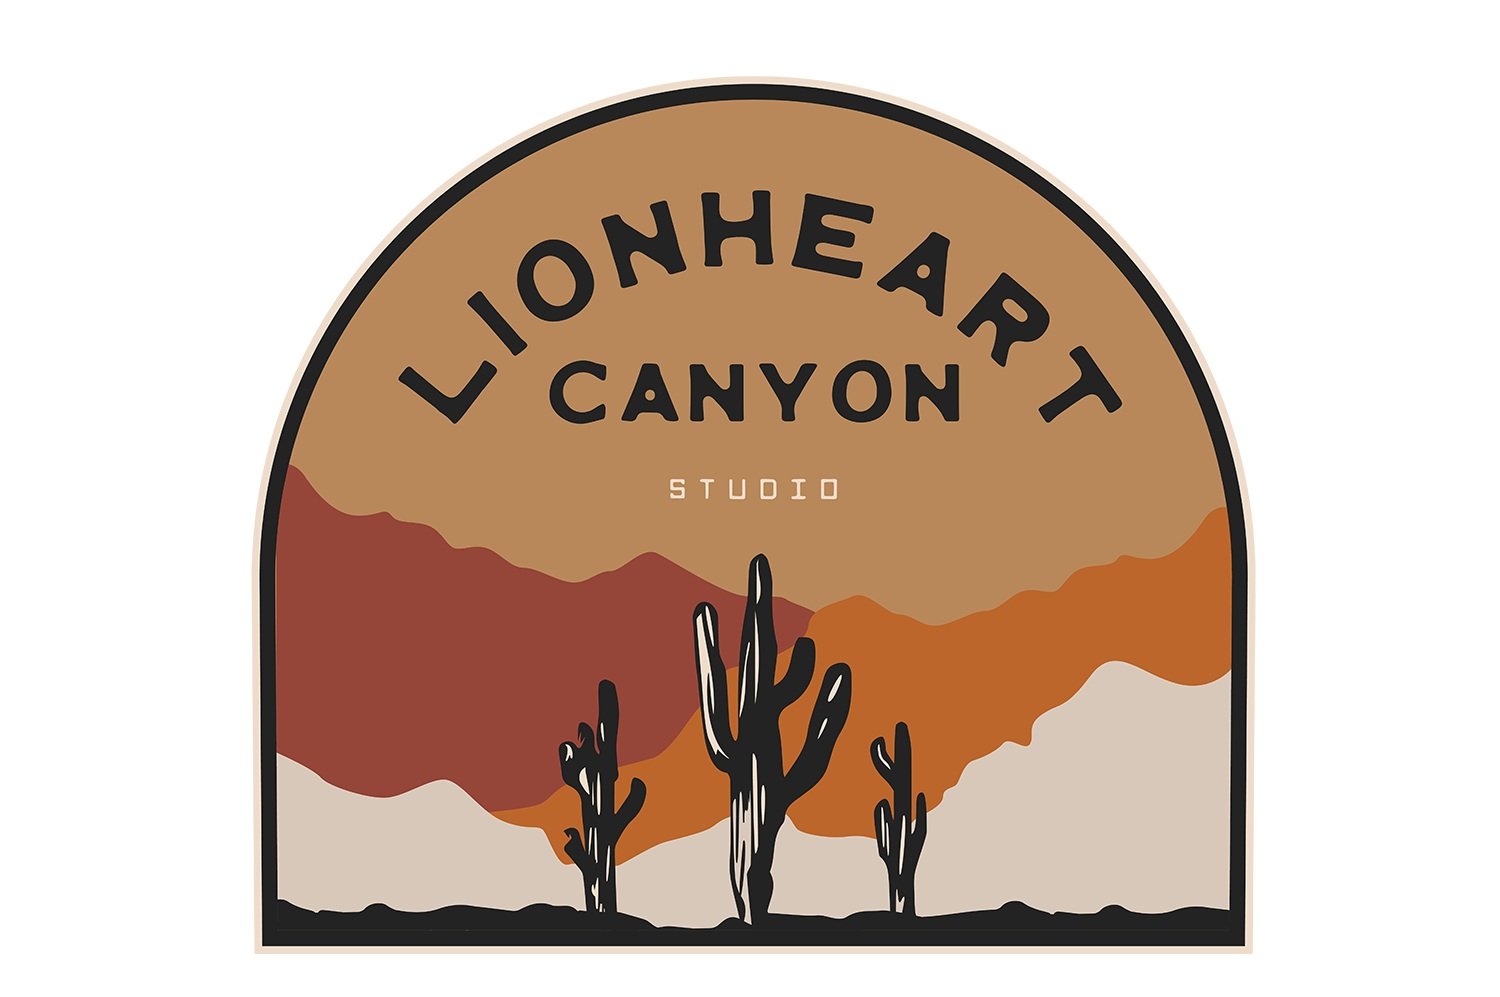 Lionheart Canyon Studio